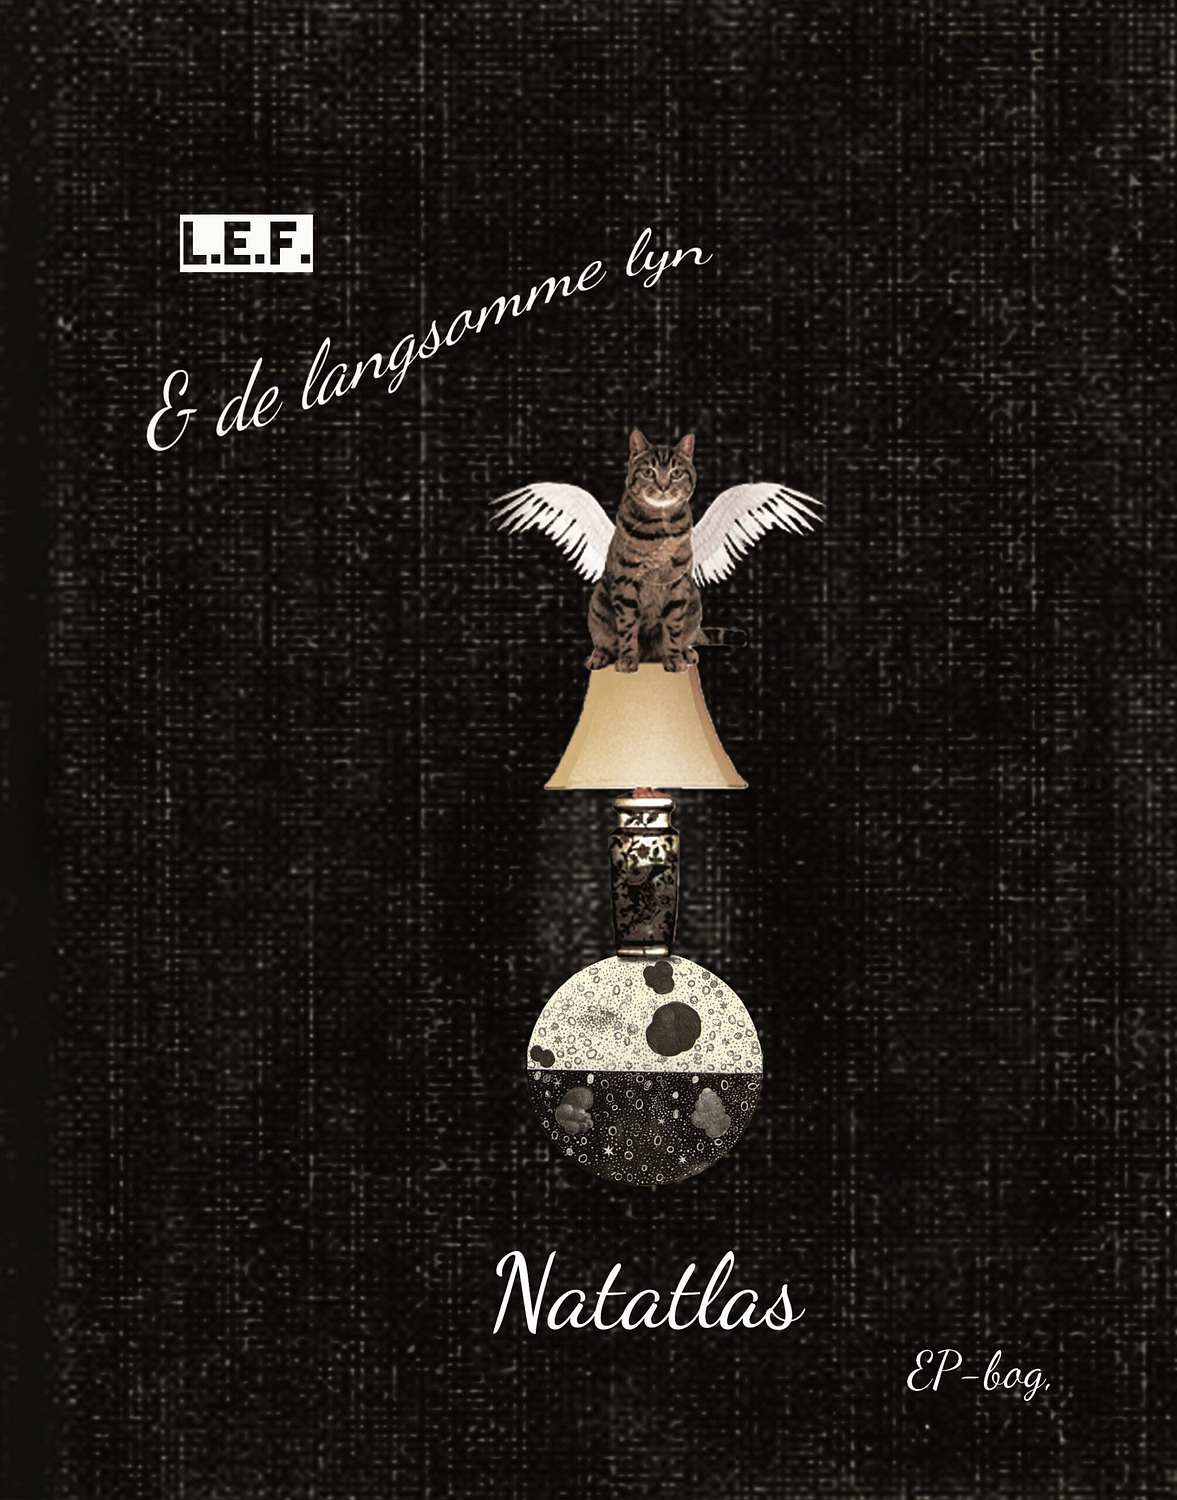 Natatlas, Lars Emil Foder, L.E.F. & De Langsomme Lyn